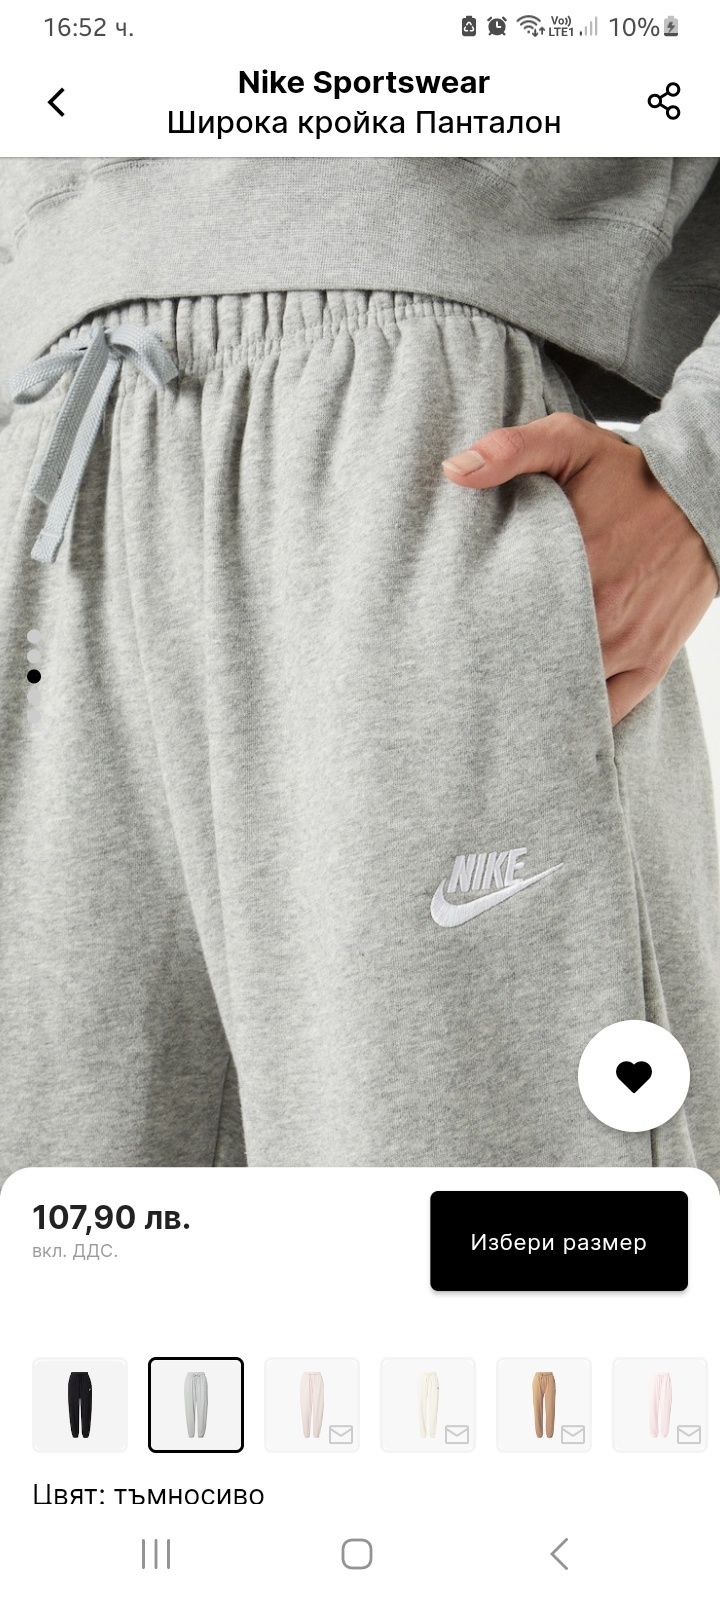 Nike sportwear Широка крайна панталон